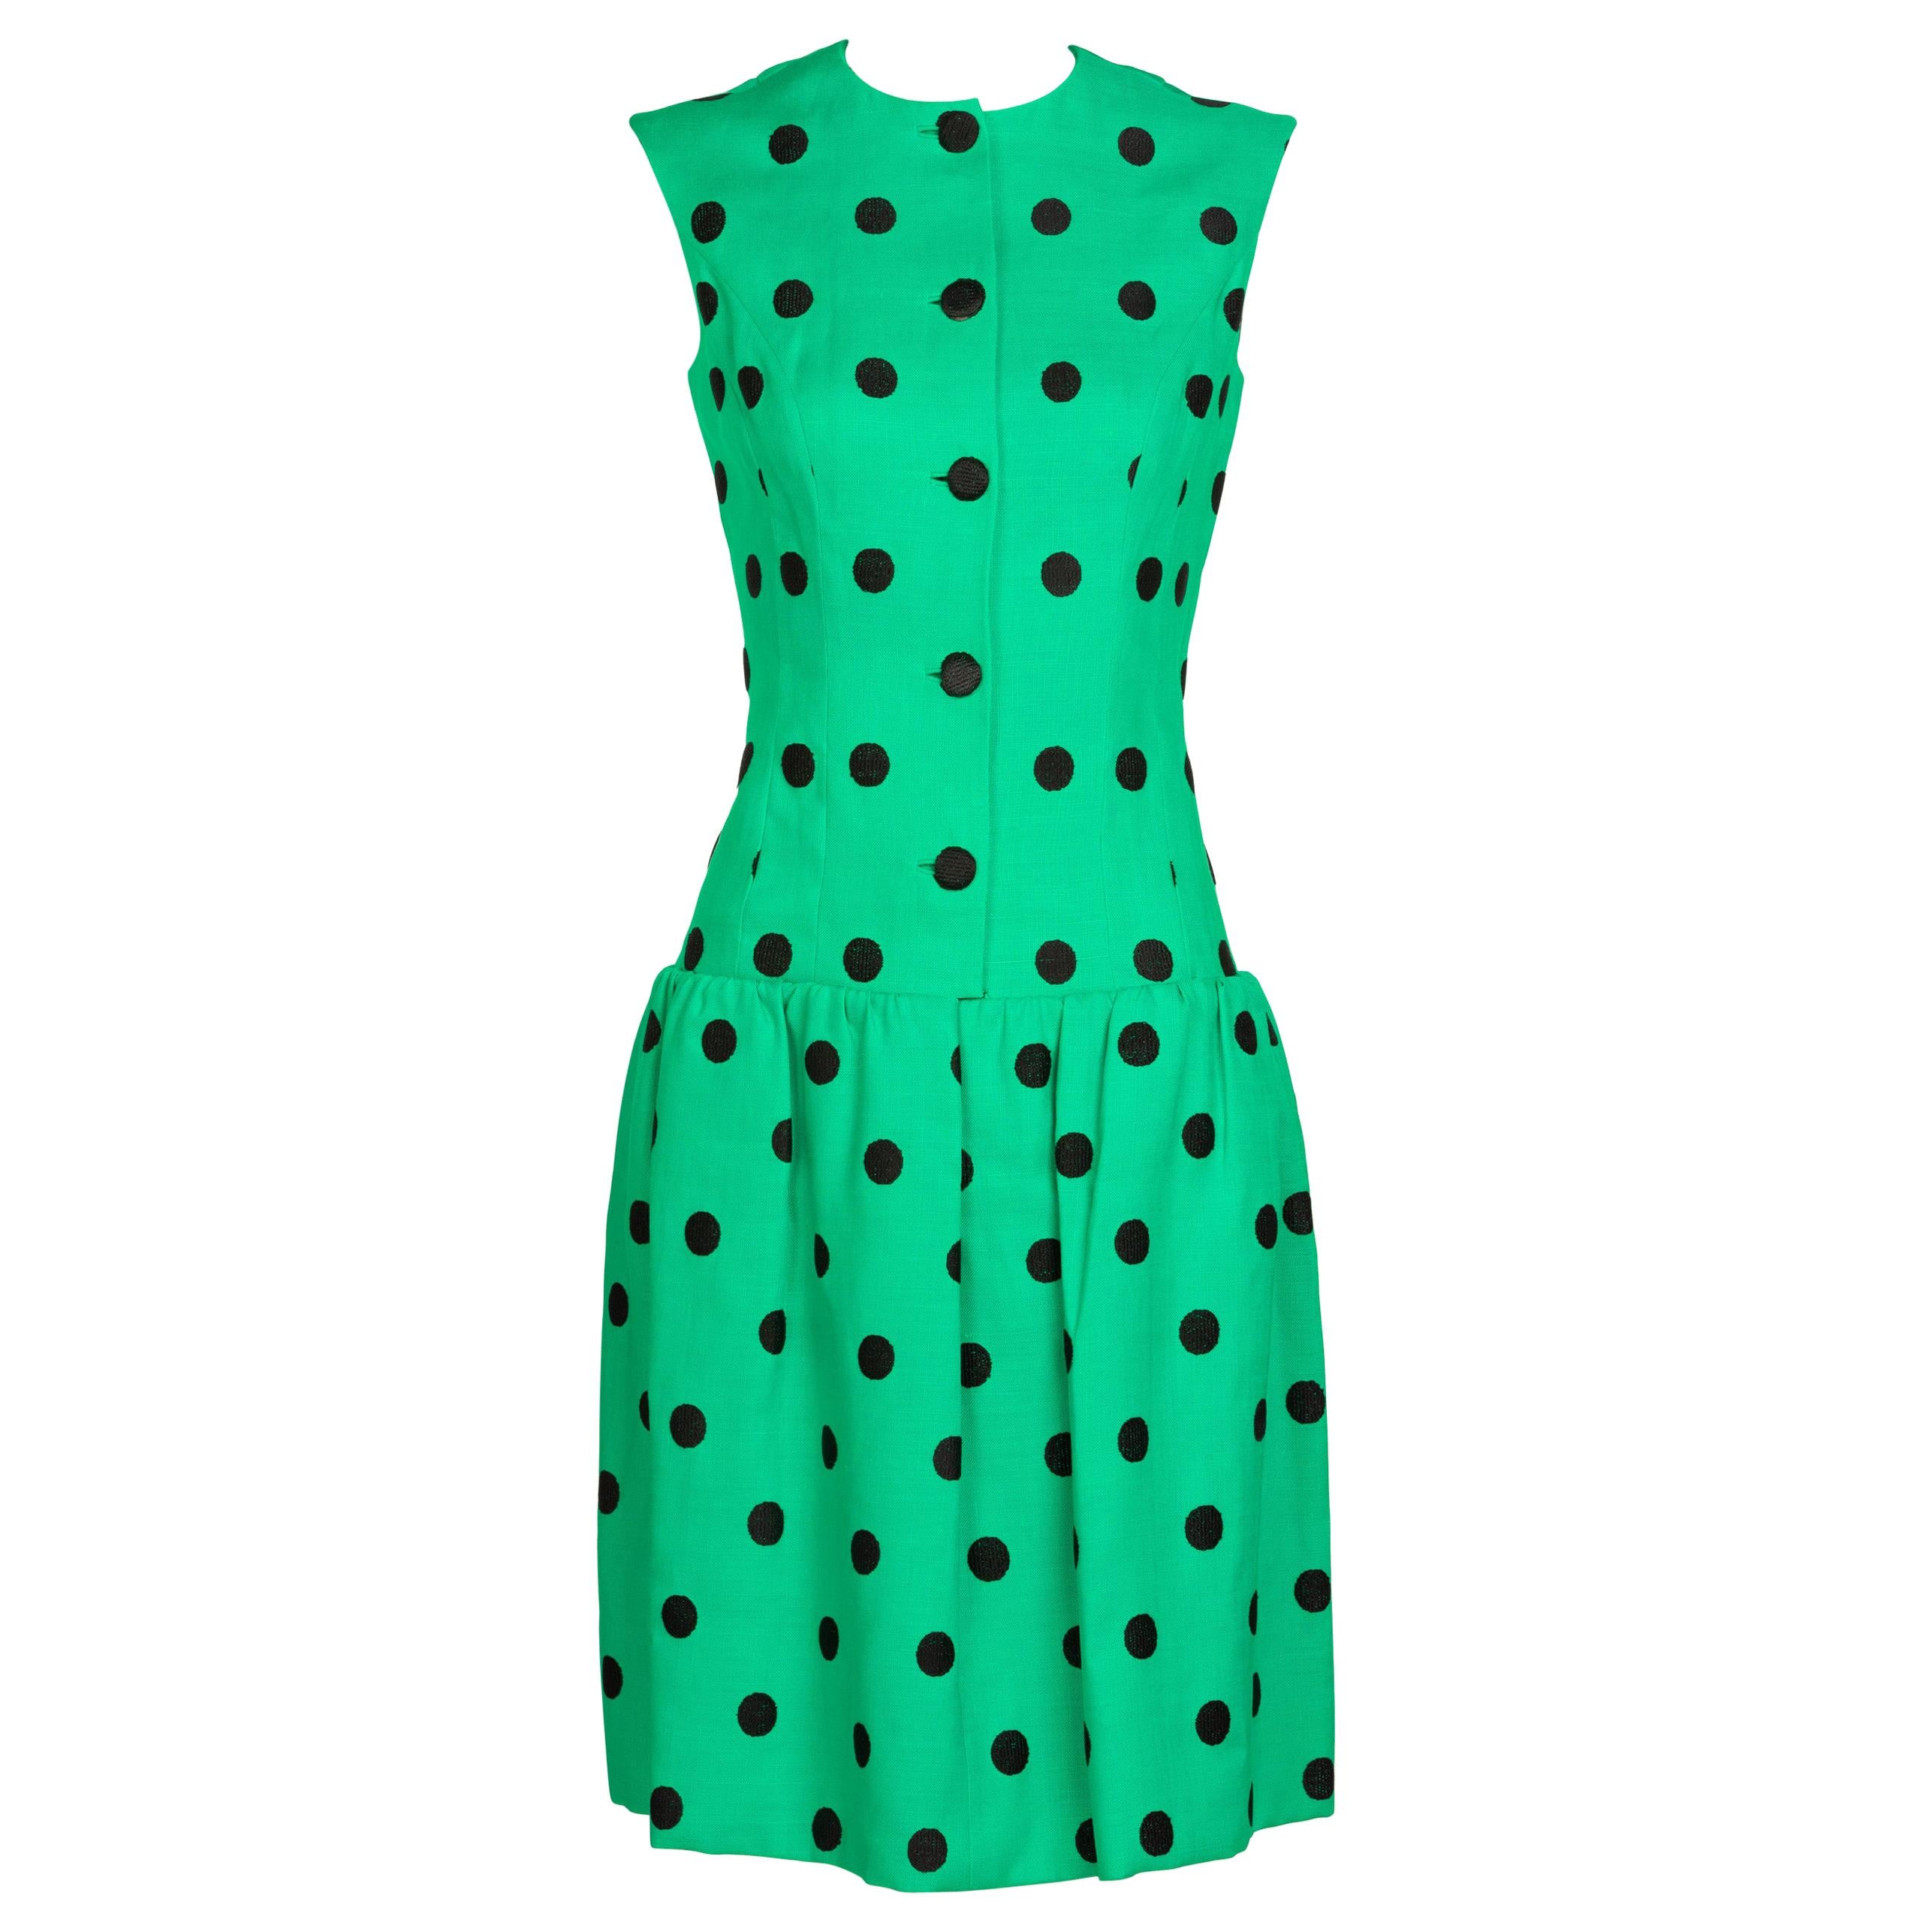 Pauline Trigere Black Polka Dot Green Linen Dress, 1960s